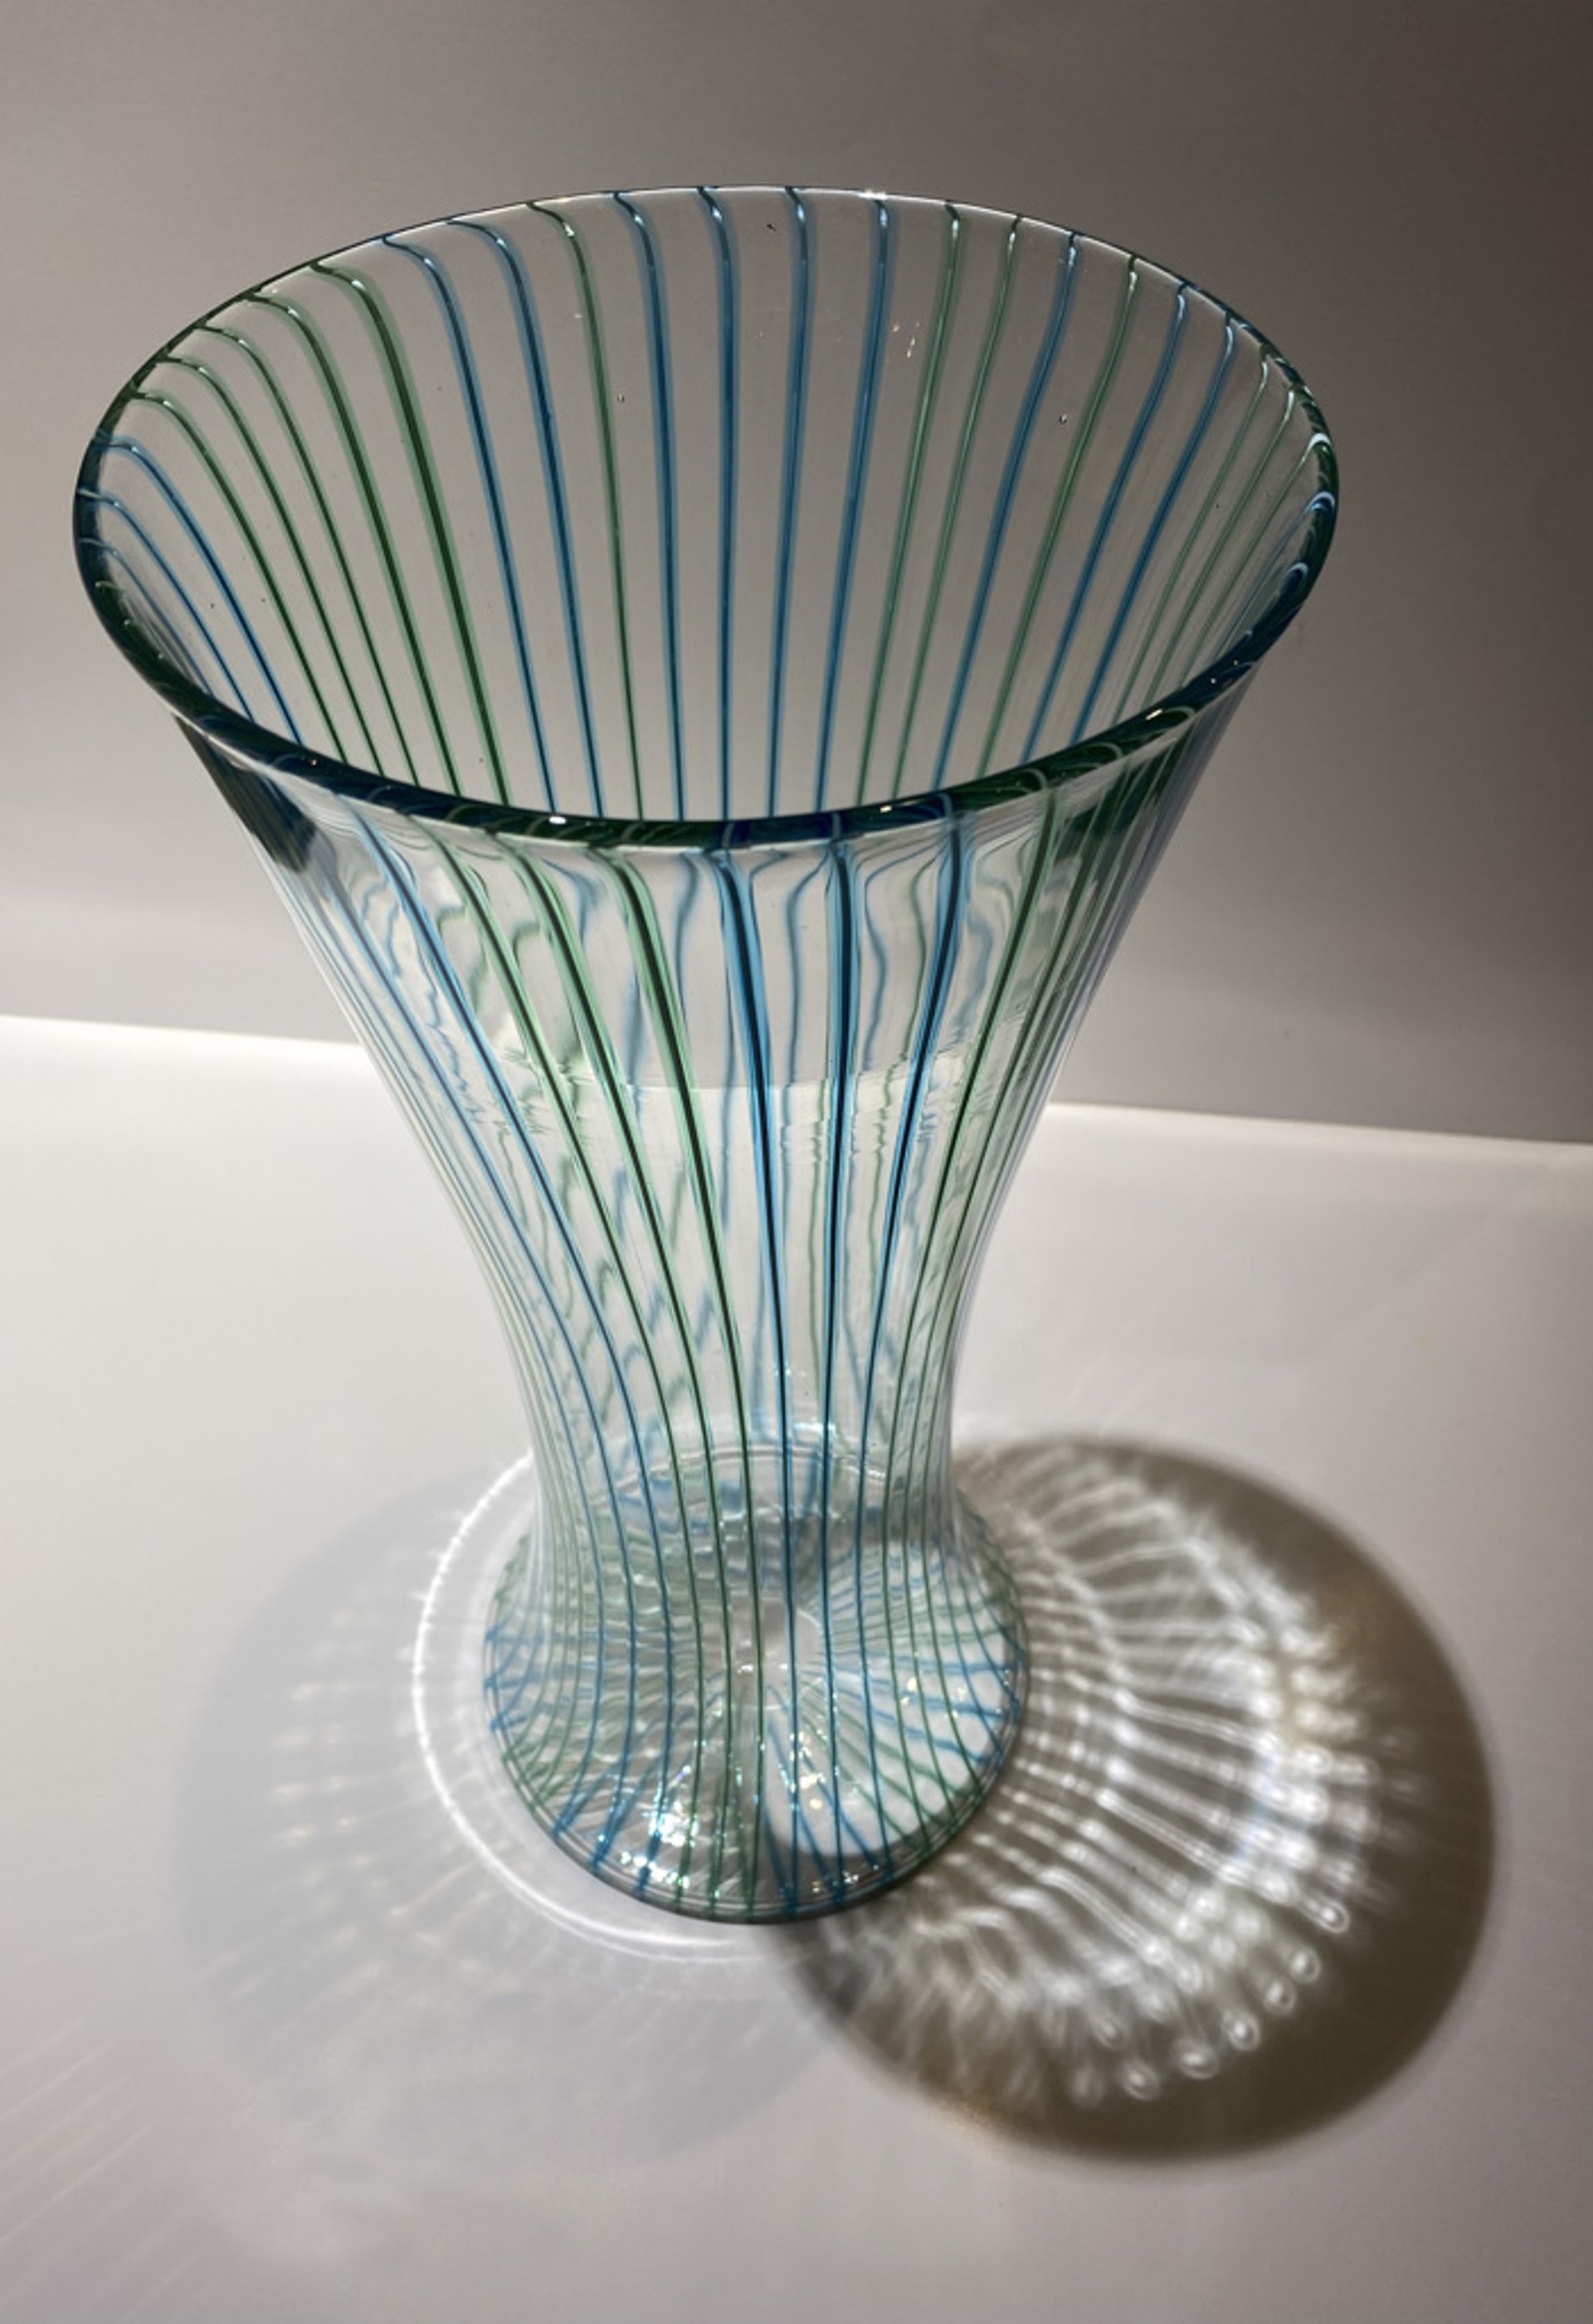 Striped Vase by Daniel Wooddell